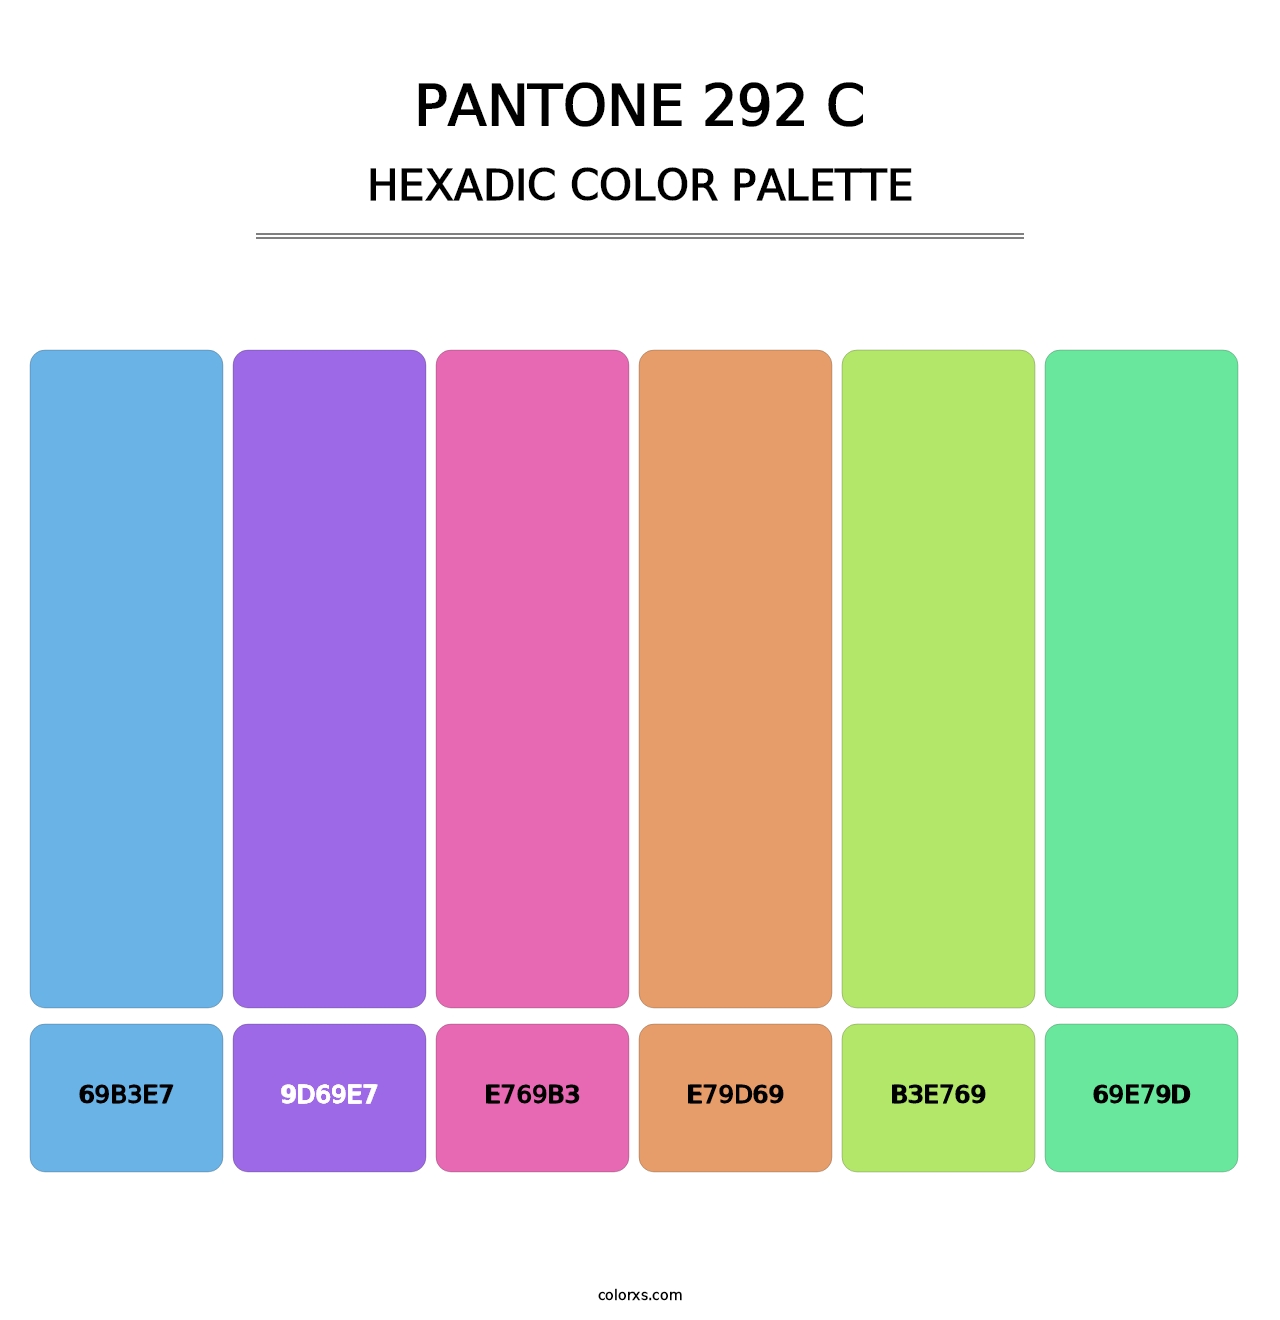 PANTONE 292 C - Hexadic Color Palette